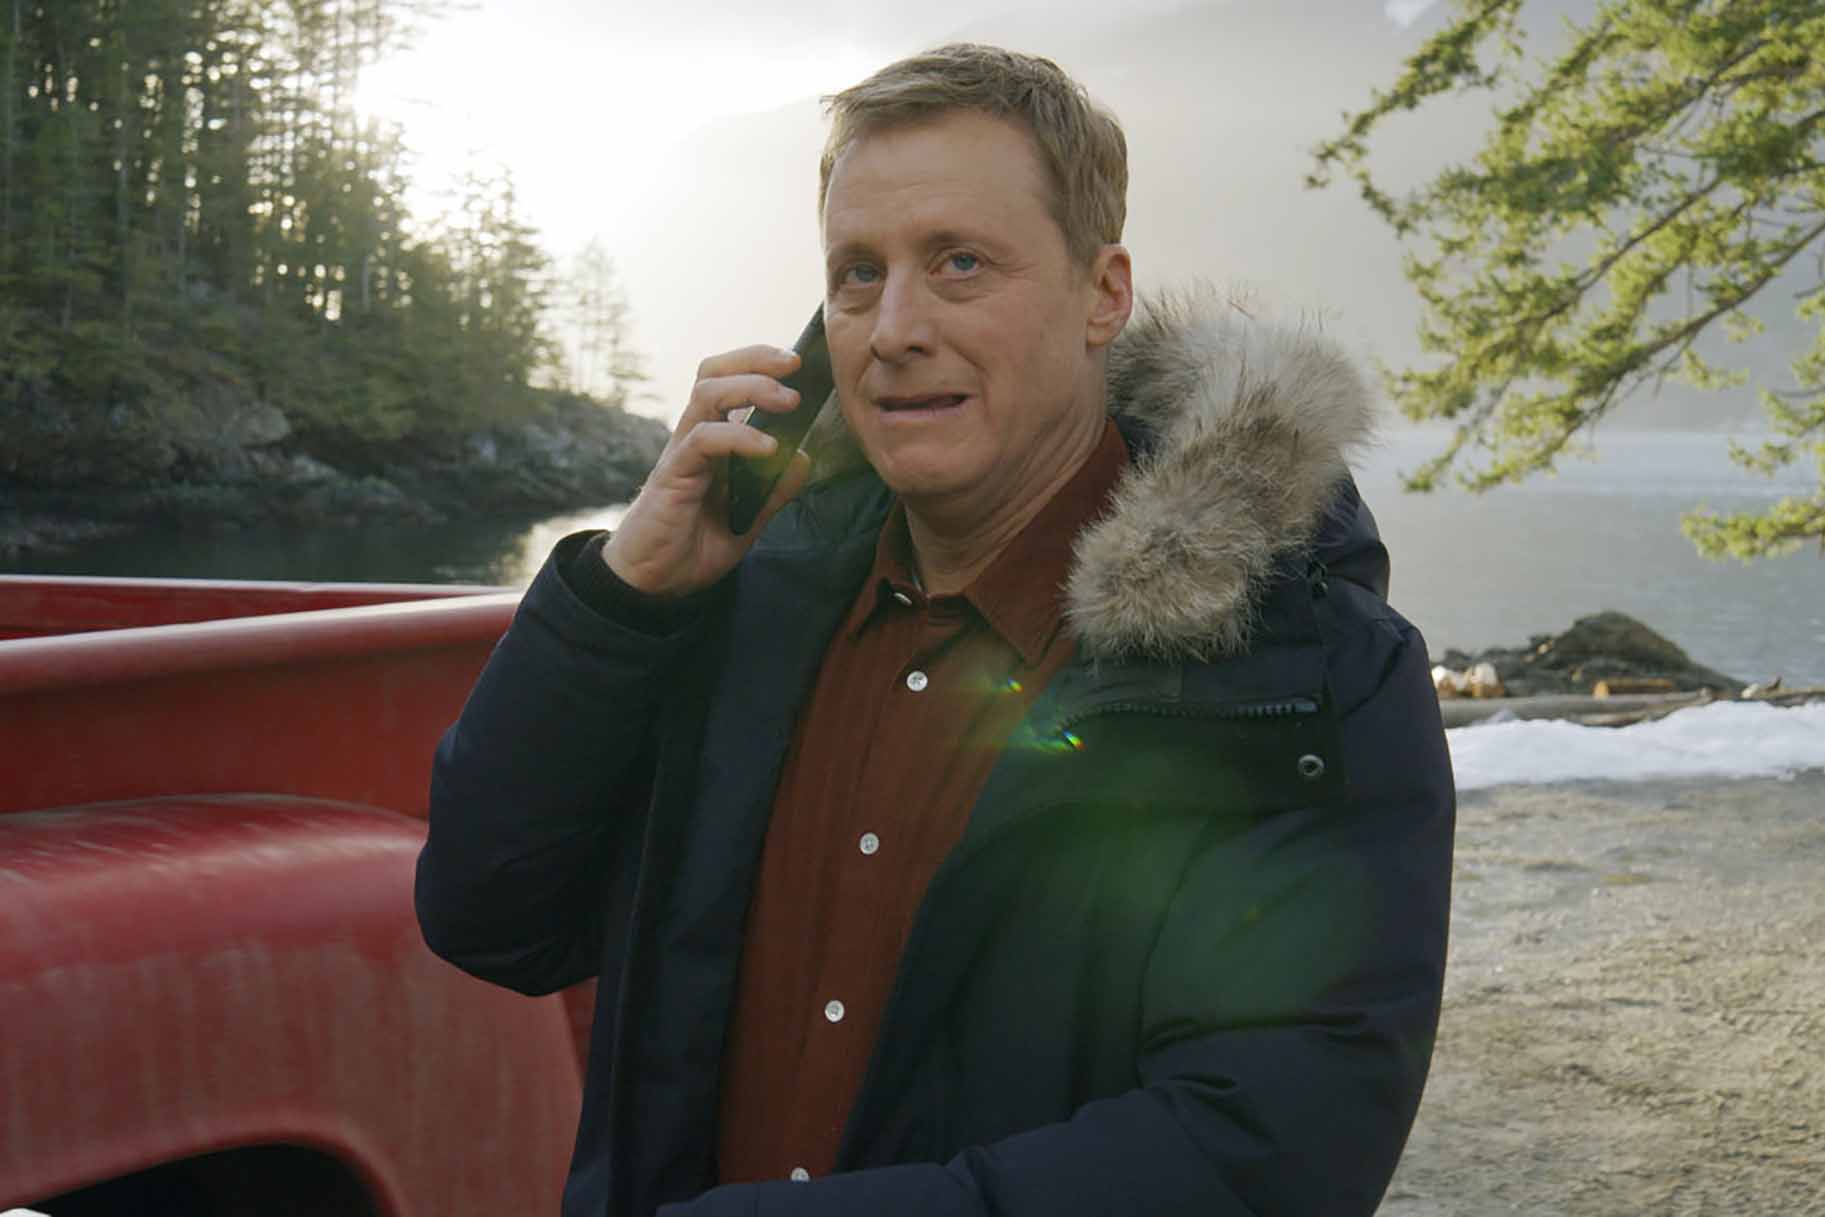 Harry Vanderspeigle speaks on a cellphone in Resident Alien Episode 302.